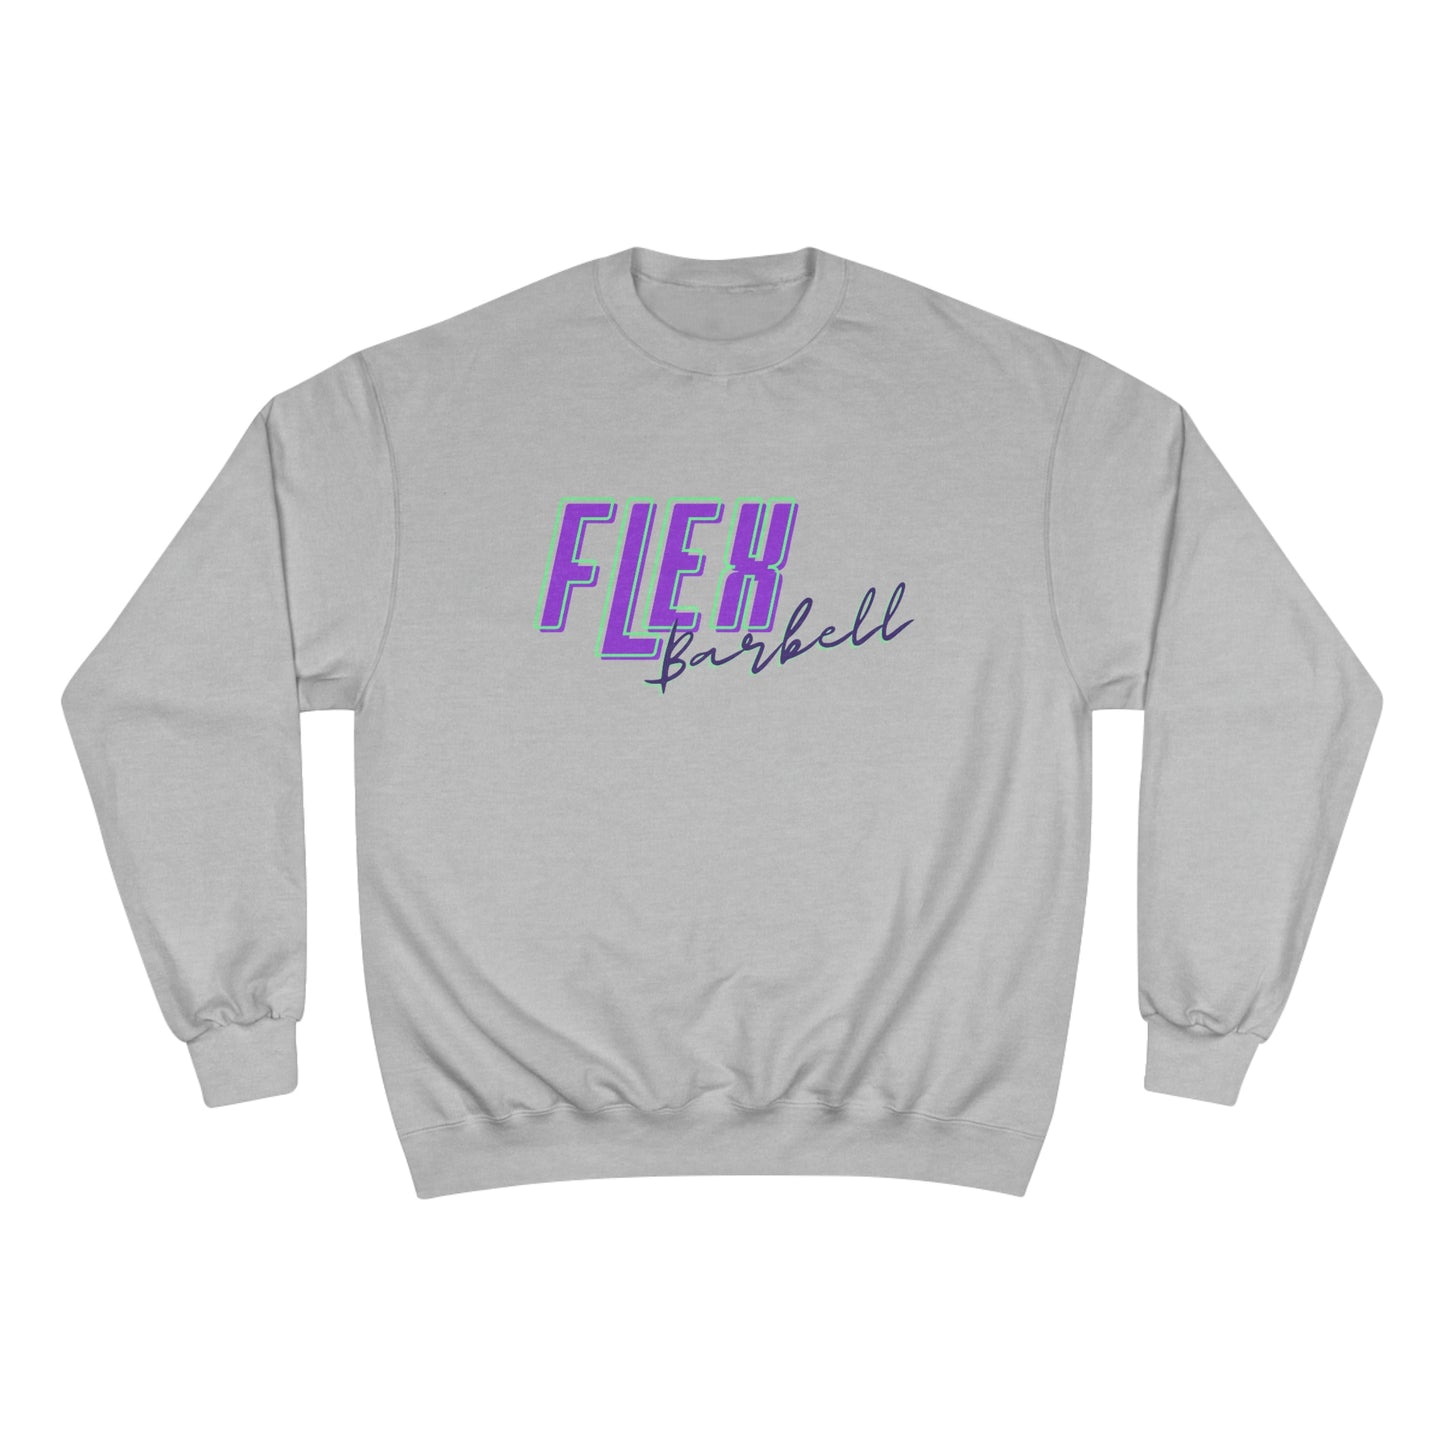 Flex Barbell Champion Sweatshirt